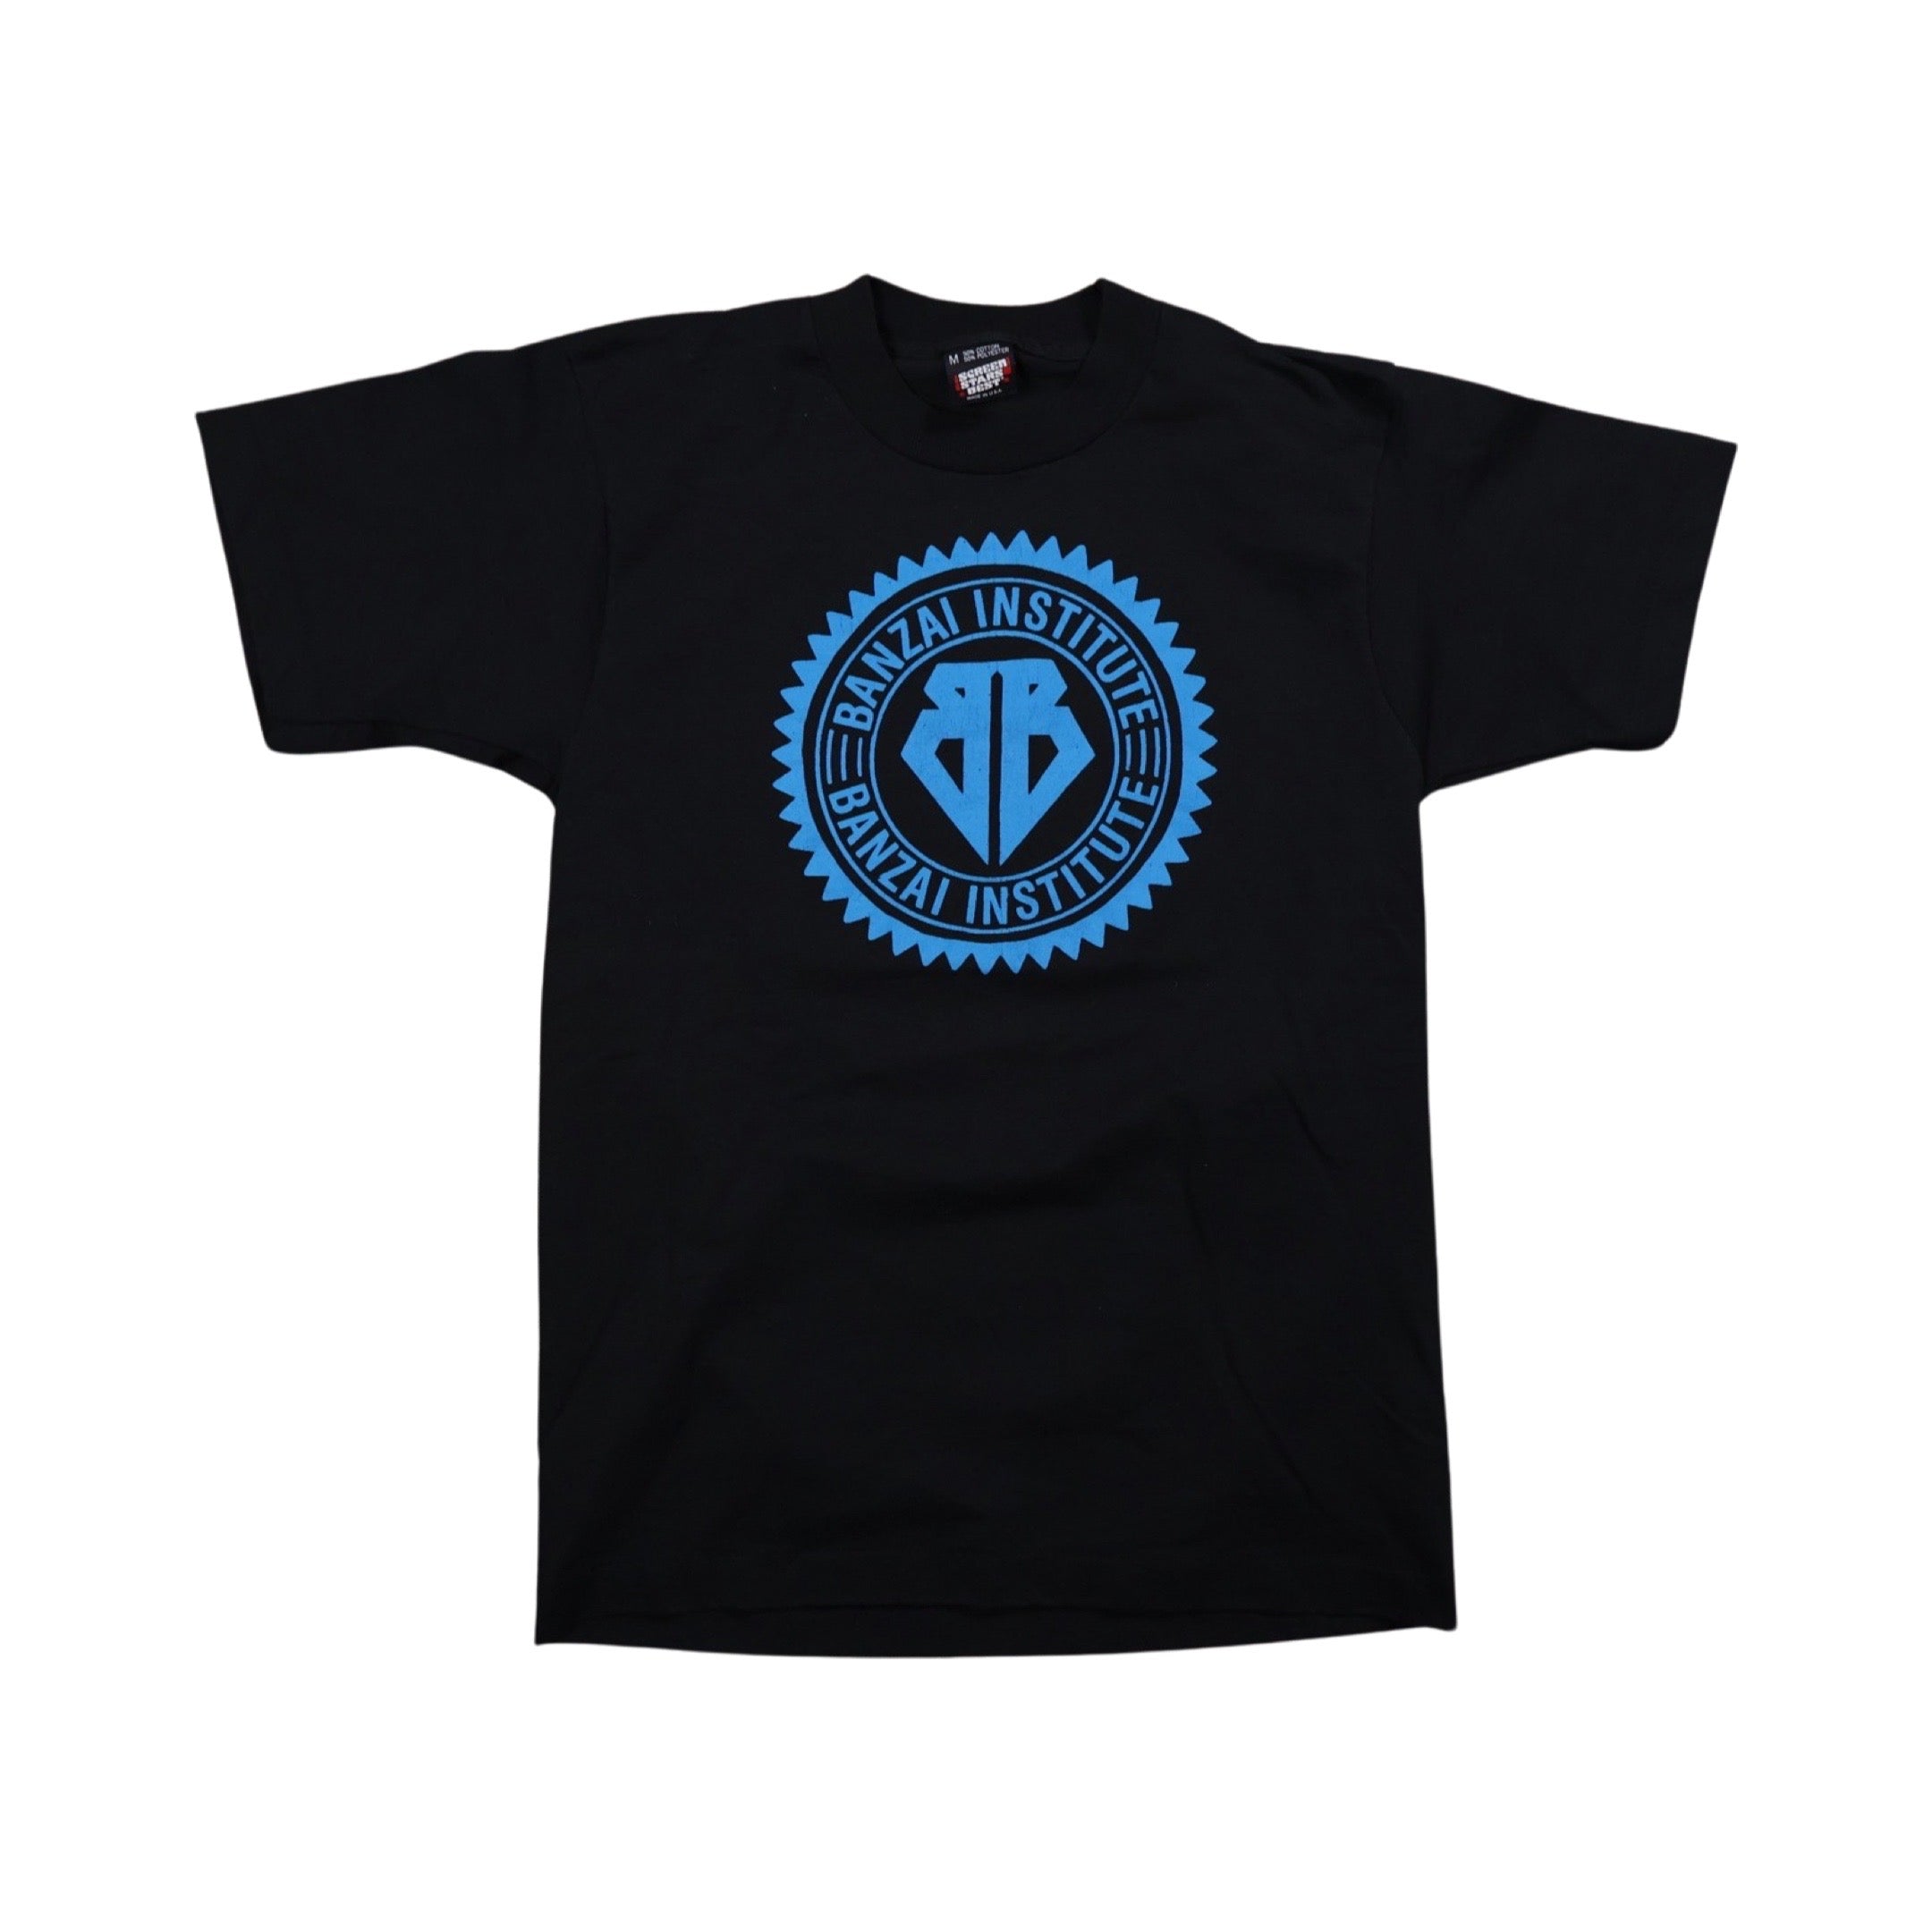 Banzai Institute 90s T-Shirt (Medium)